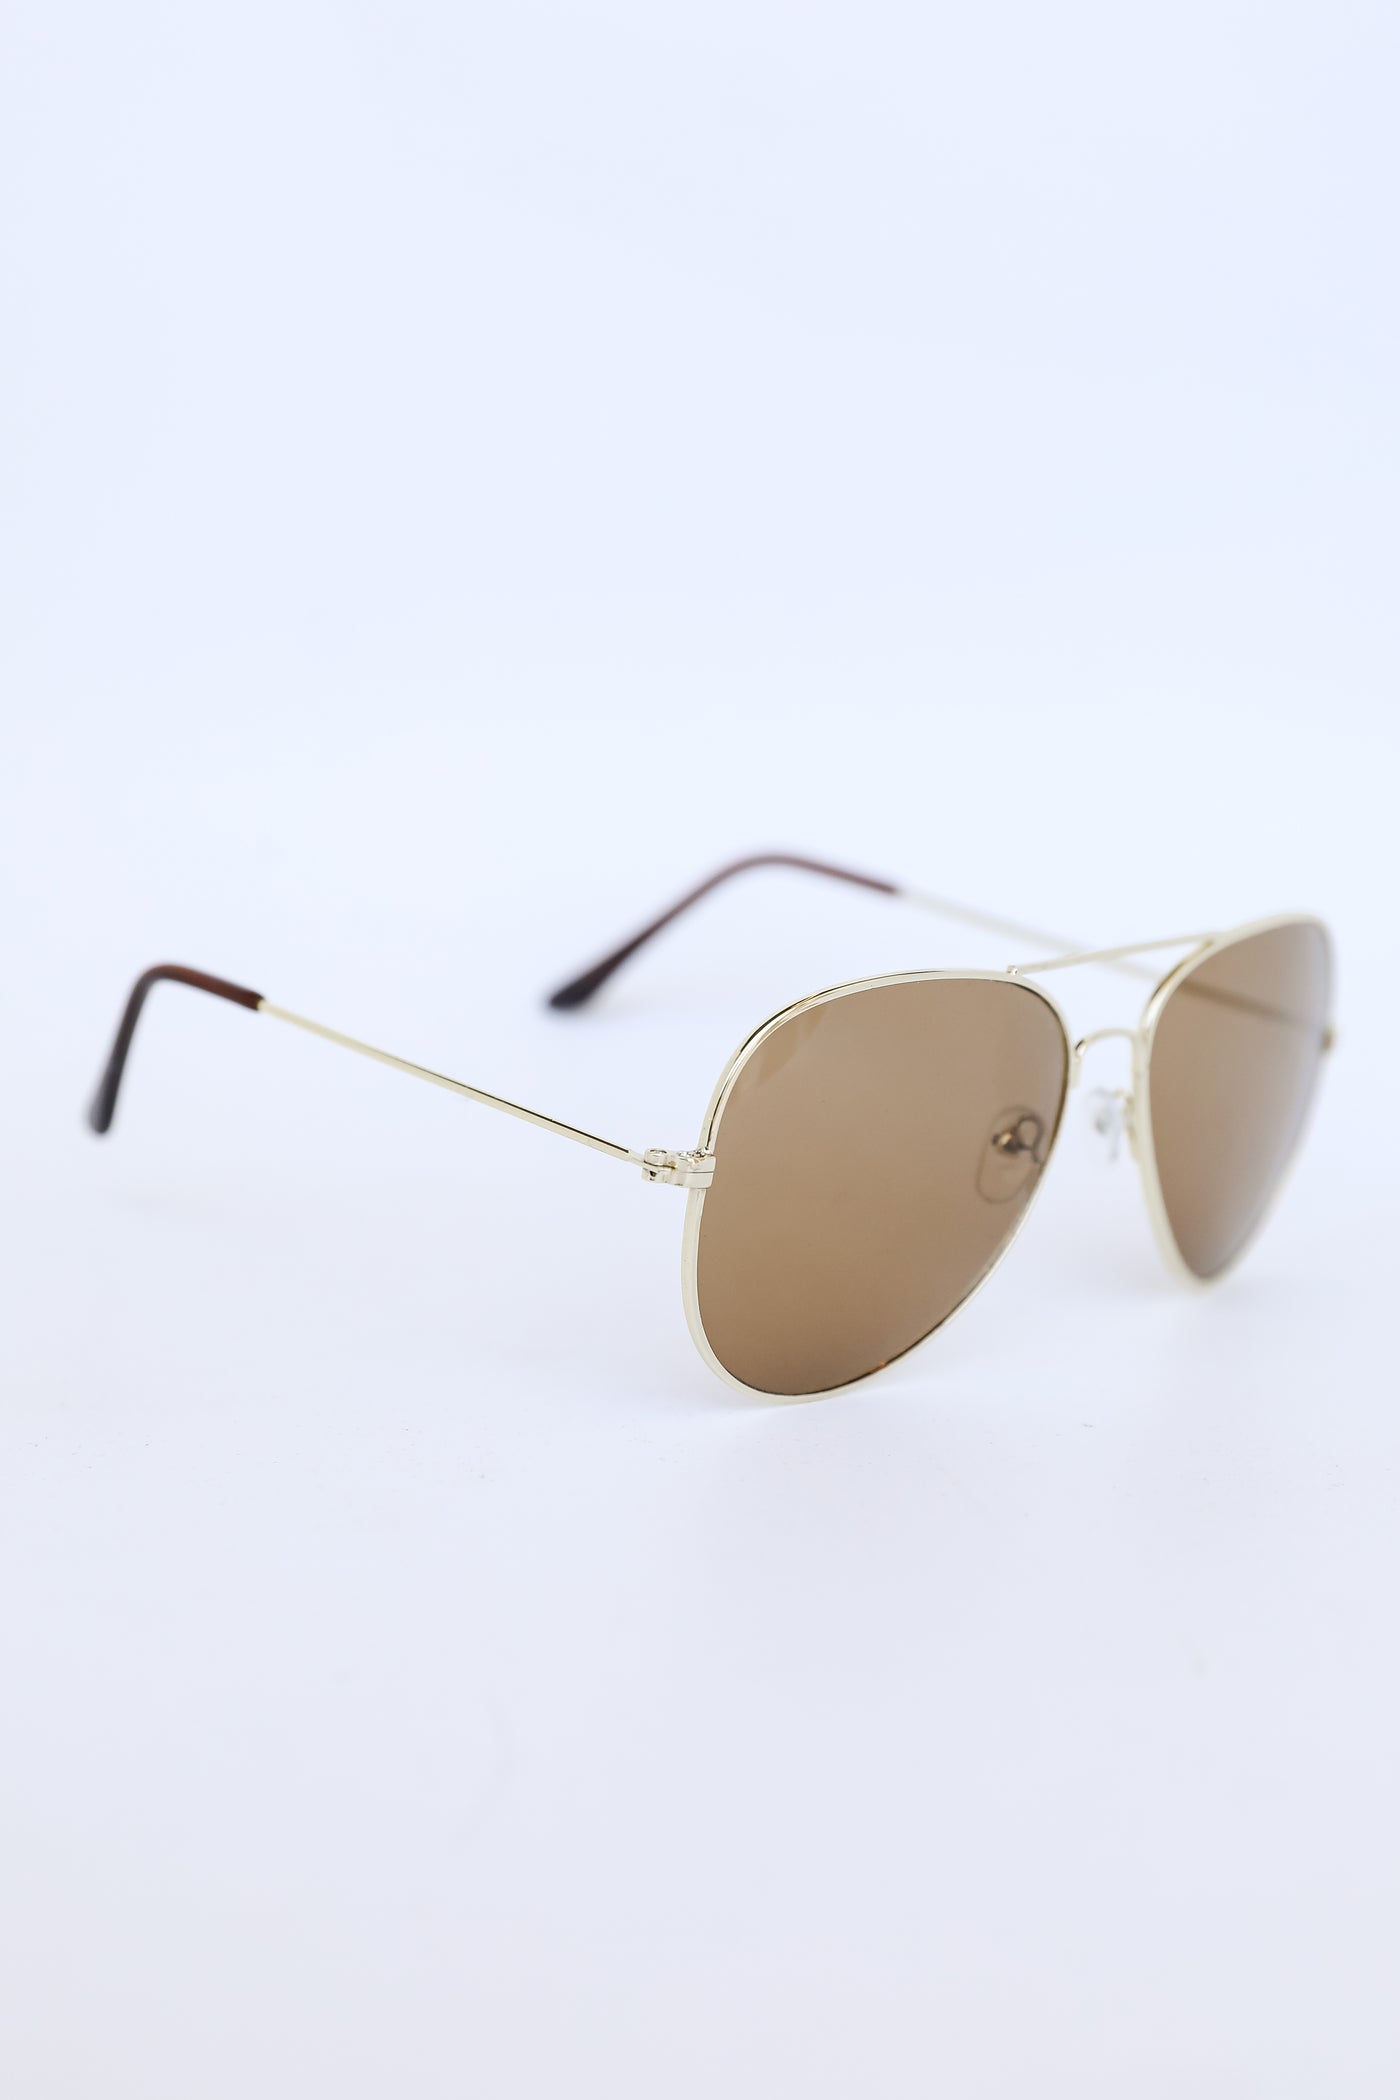 Gold Aviator Sunglasses flat lay